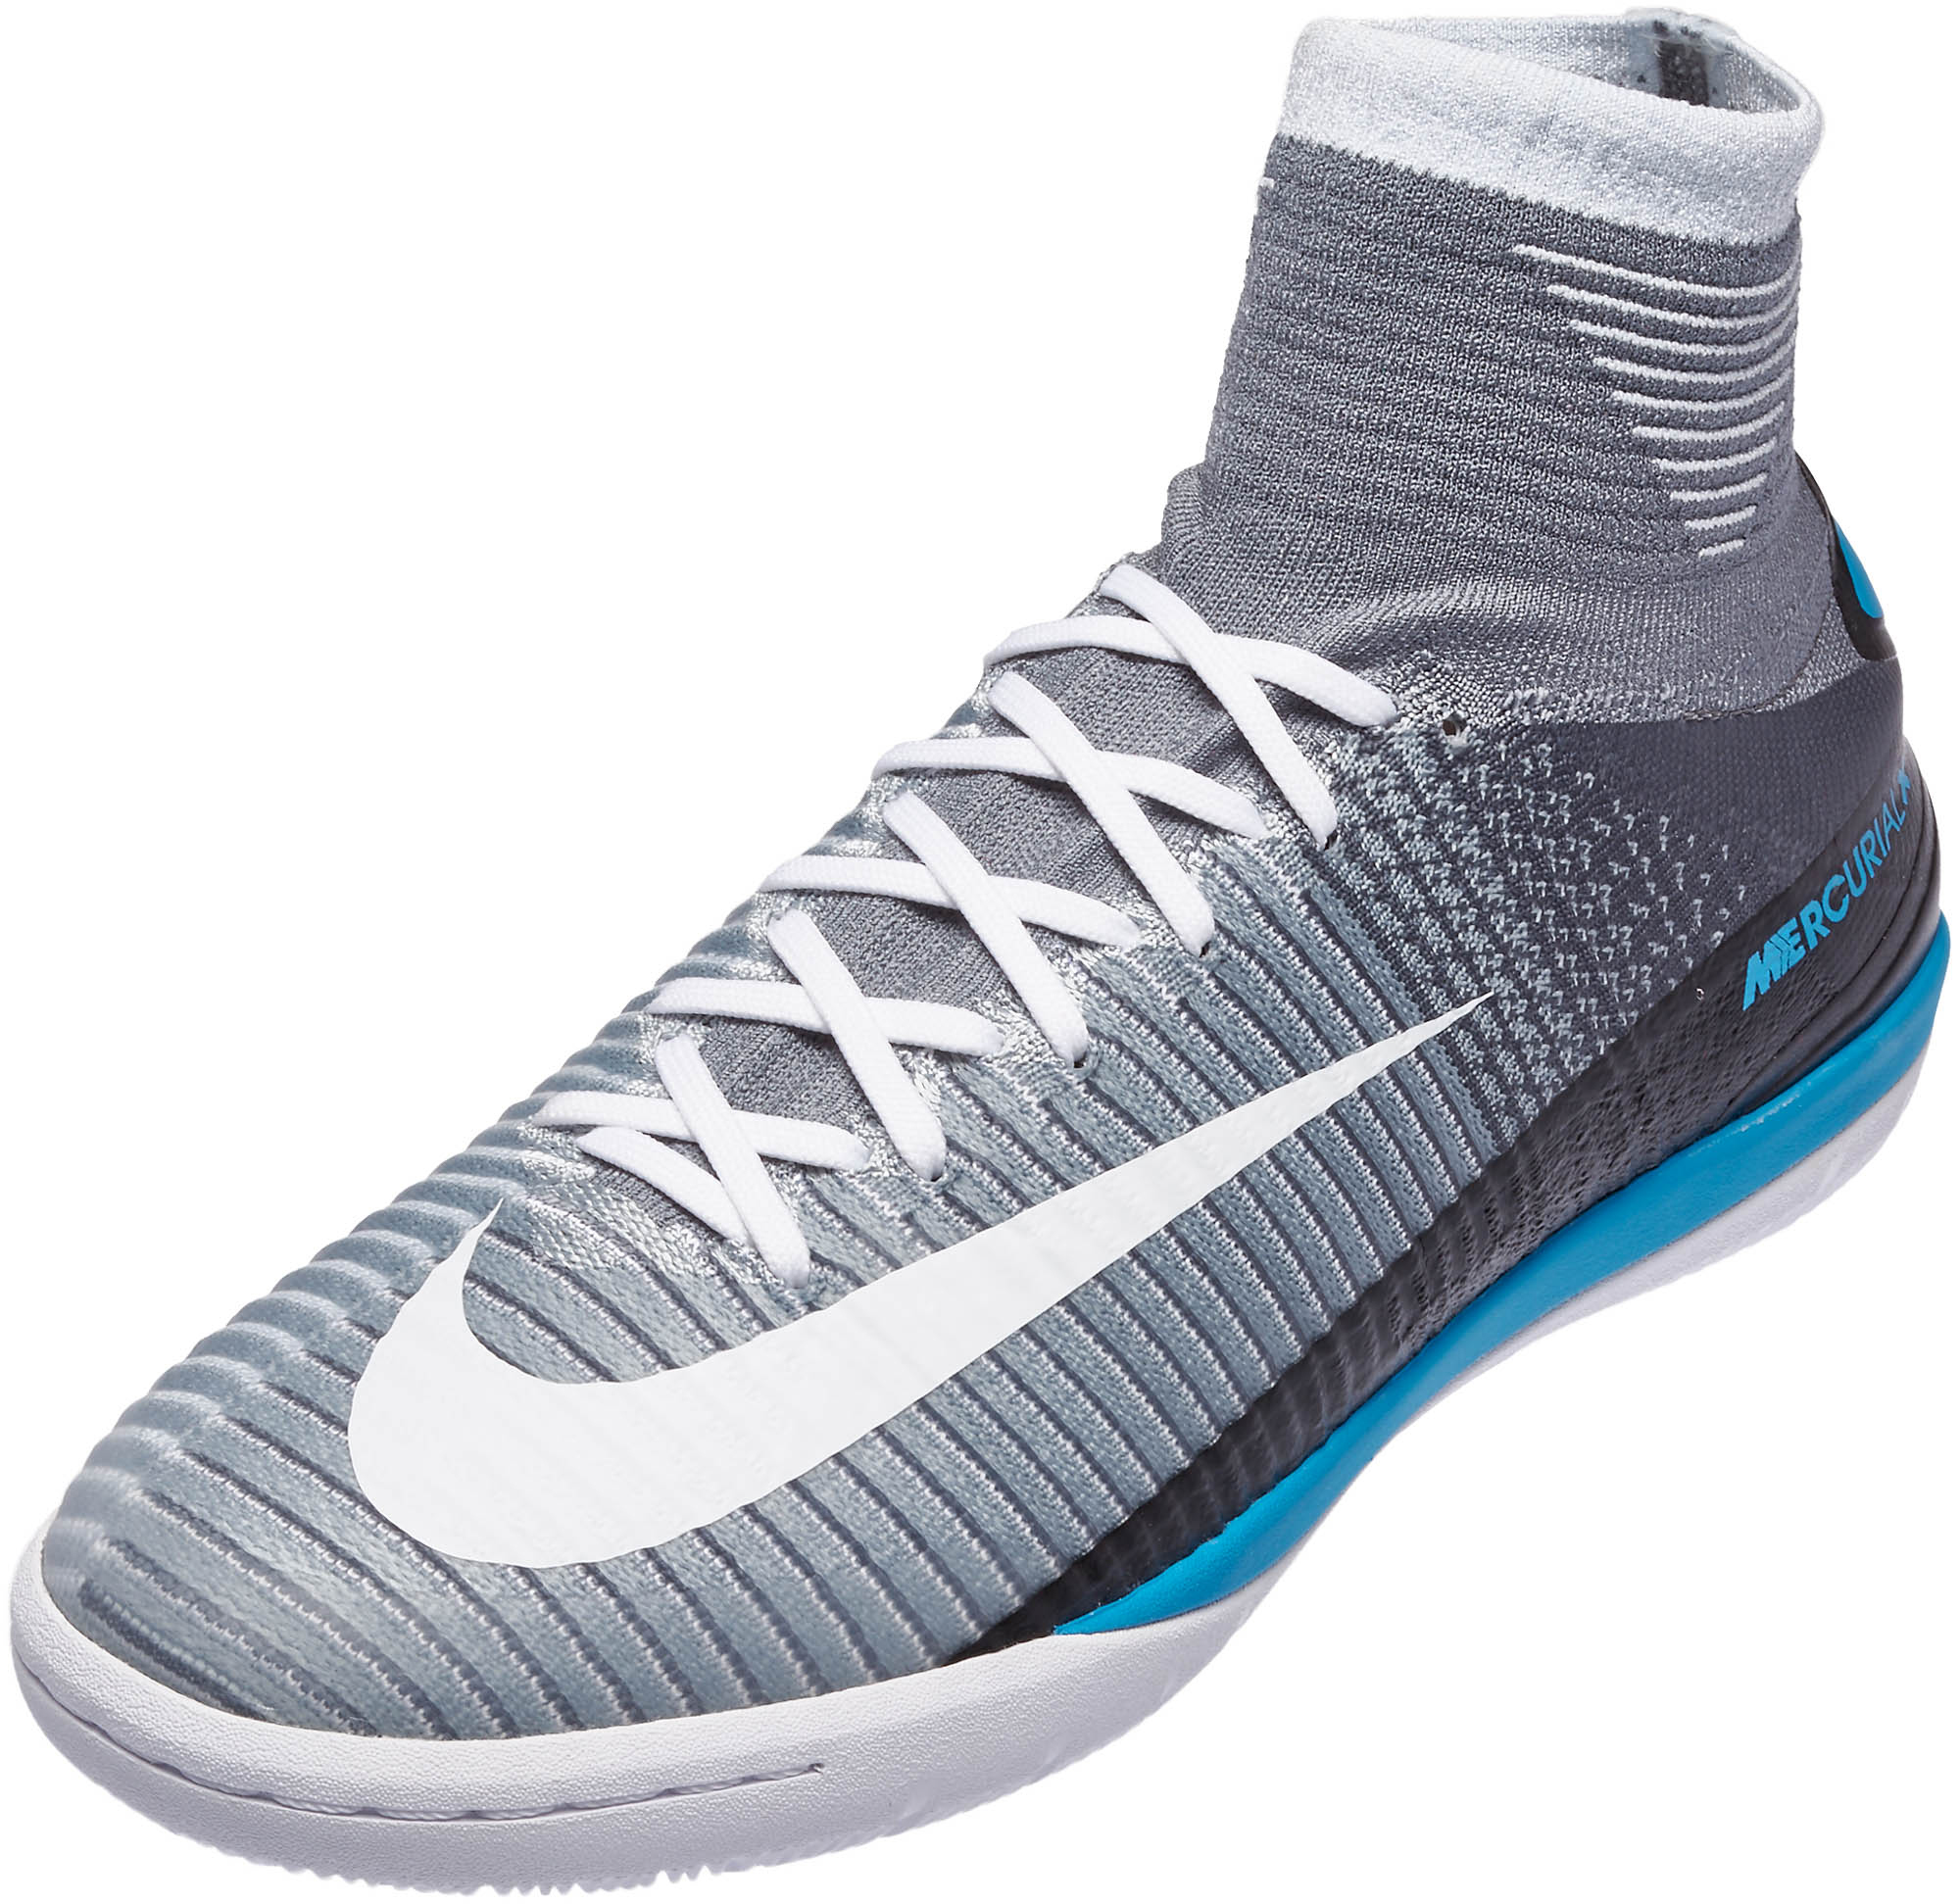 Nike II - Grey Indoor Soccer Shoes